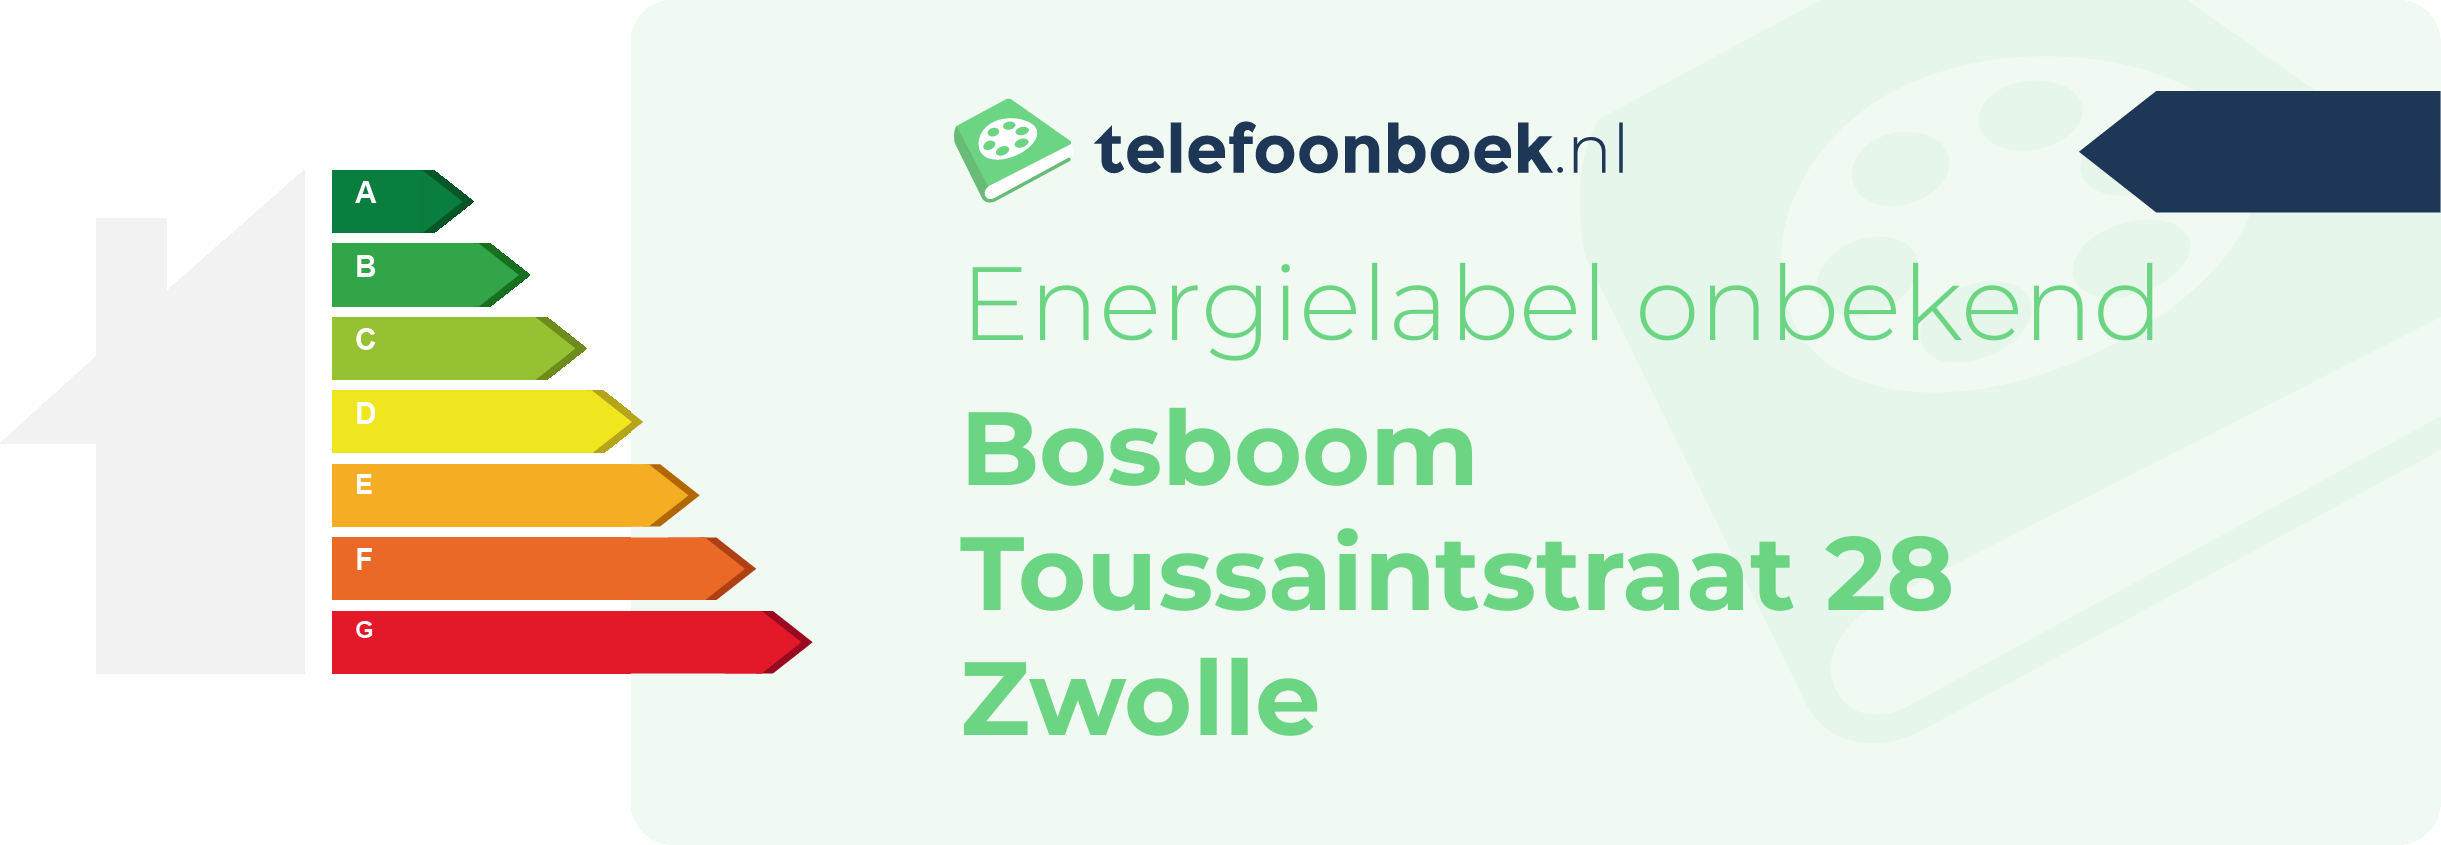 Energielabel Bosboom Toussaintstraat 28 Zwolle